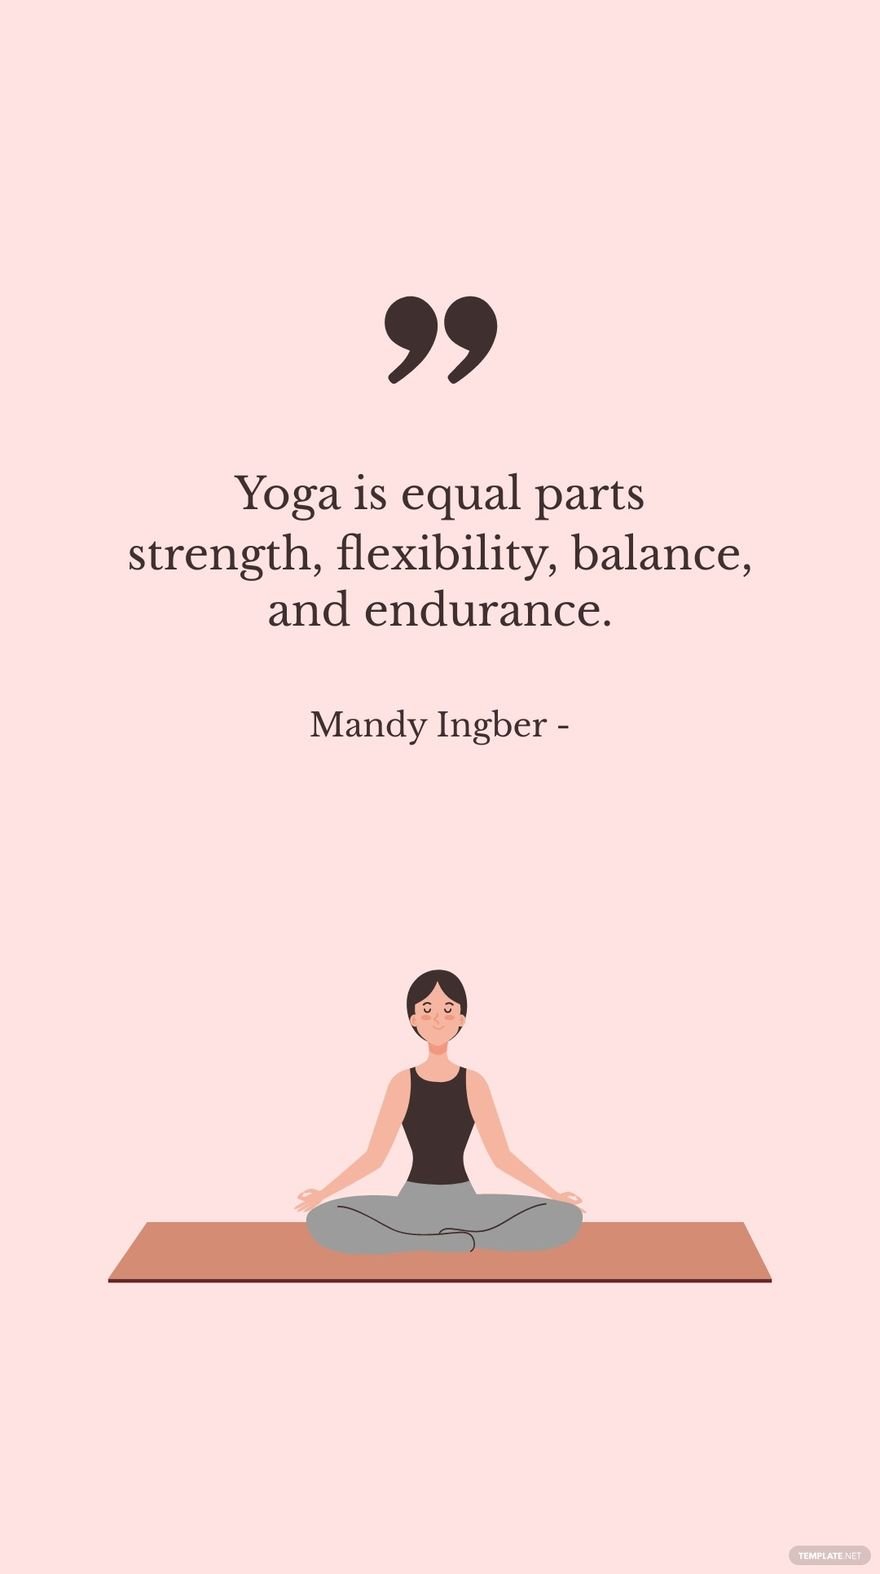 Mandy Ingber - Yoga is equal parts strength, flexibility, balance, and endurance.